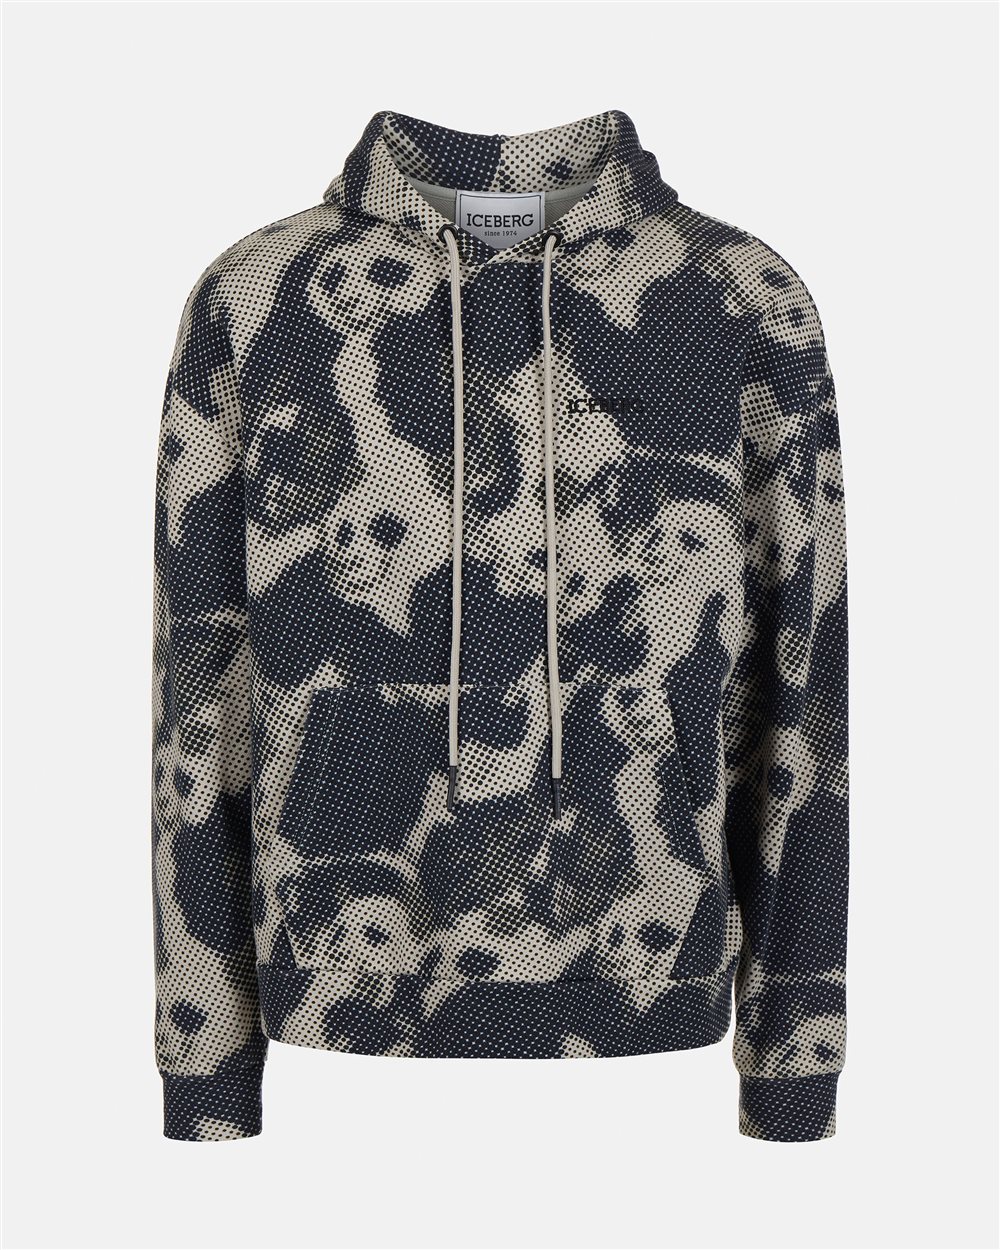 Sweatshirt with pixel print and logo - Iceberg - Official Website